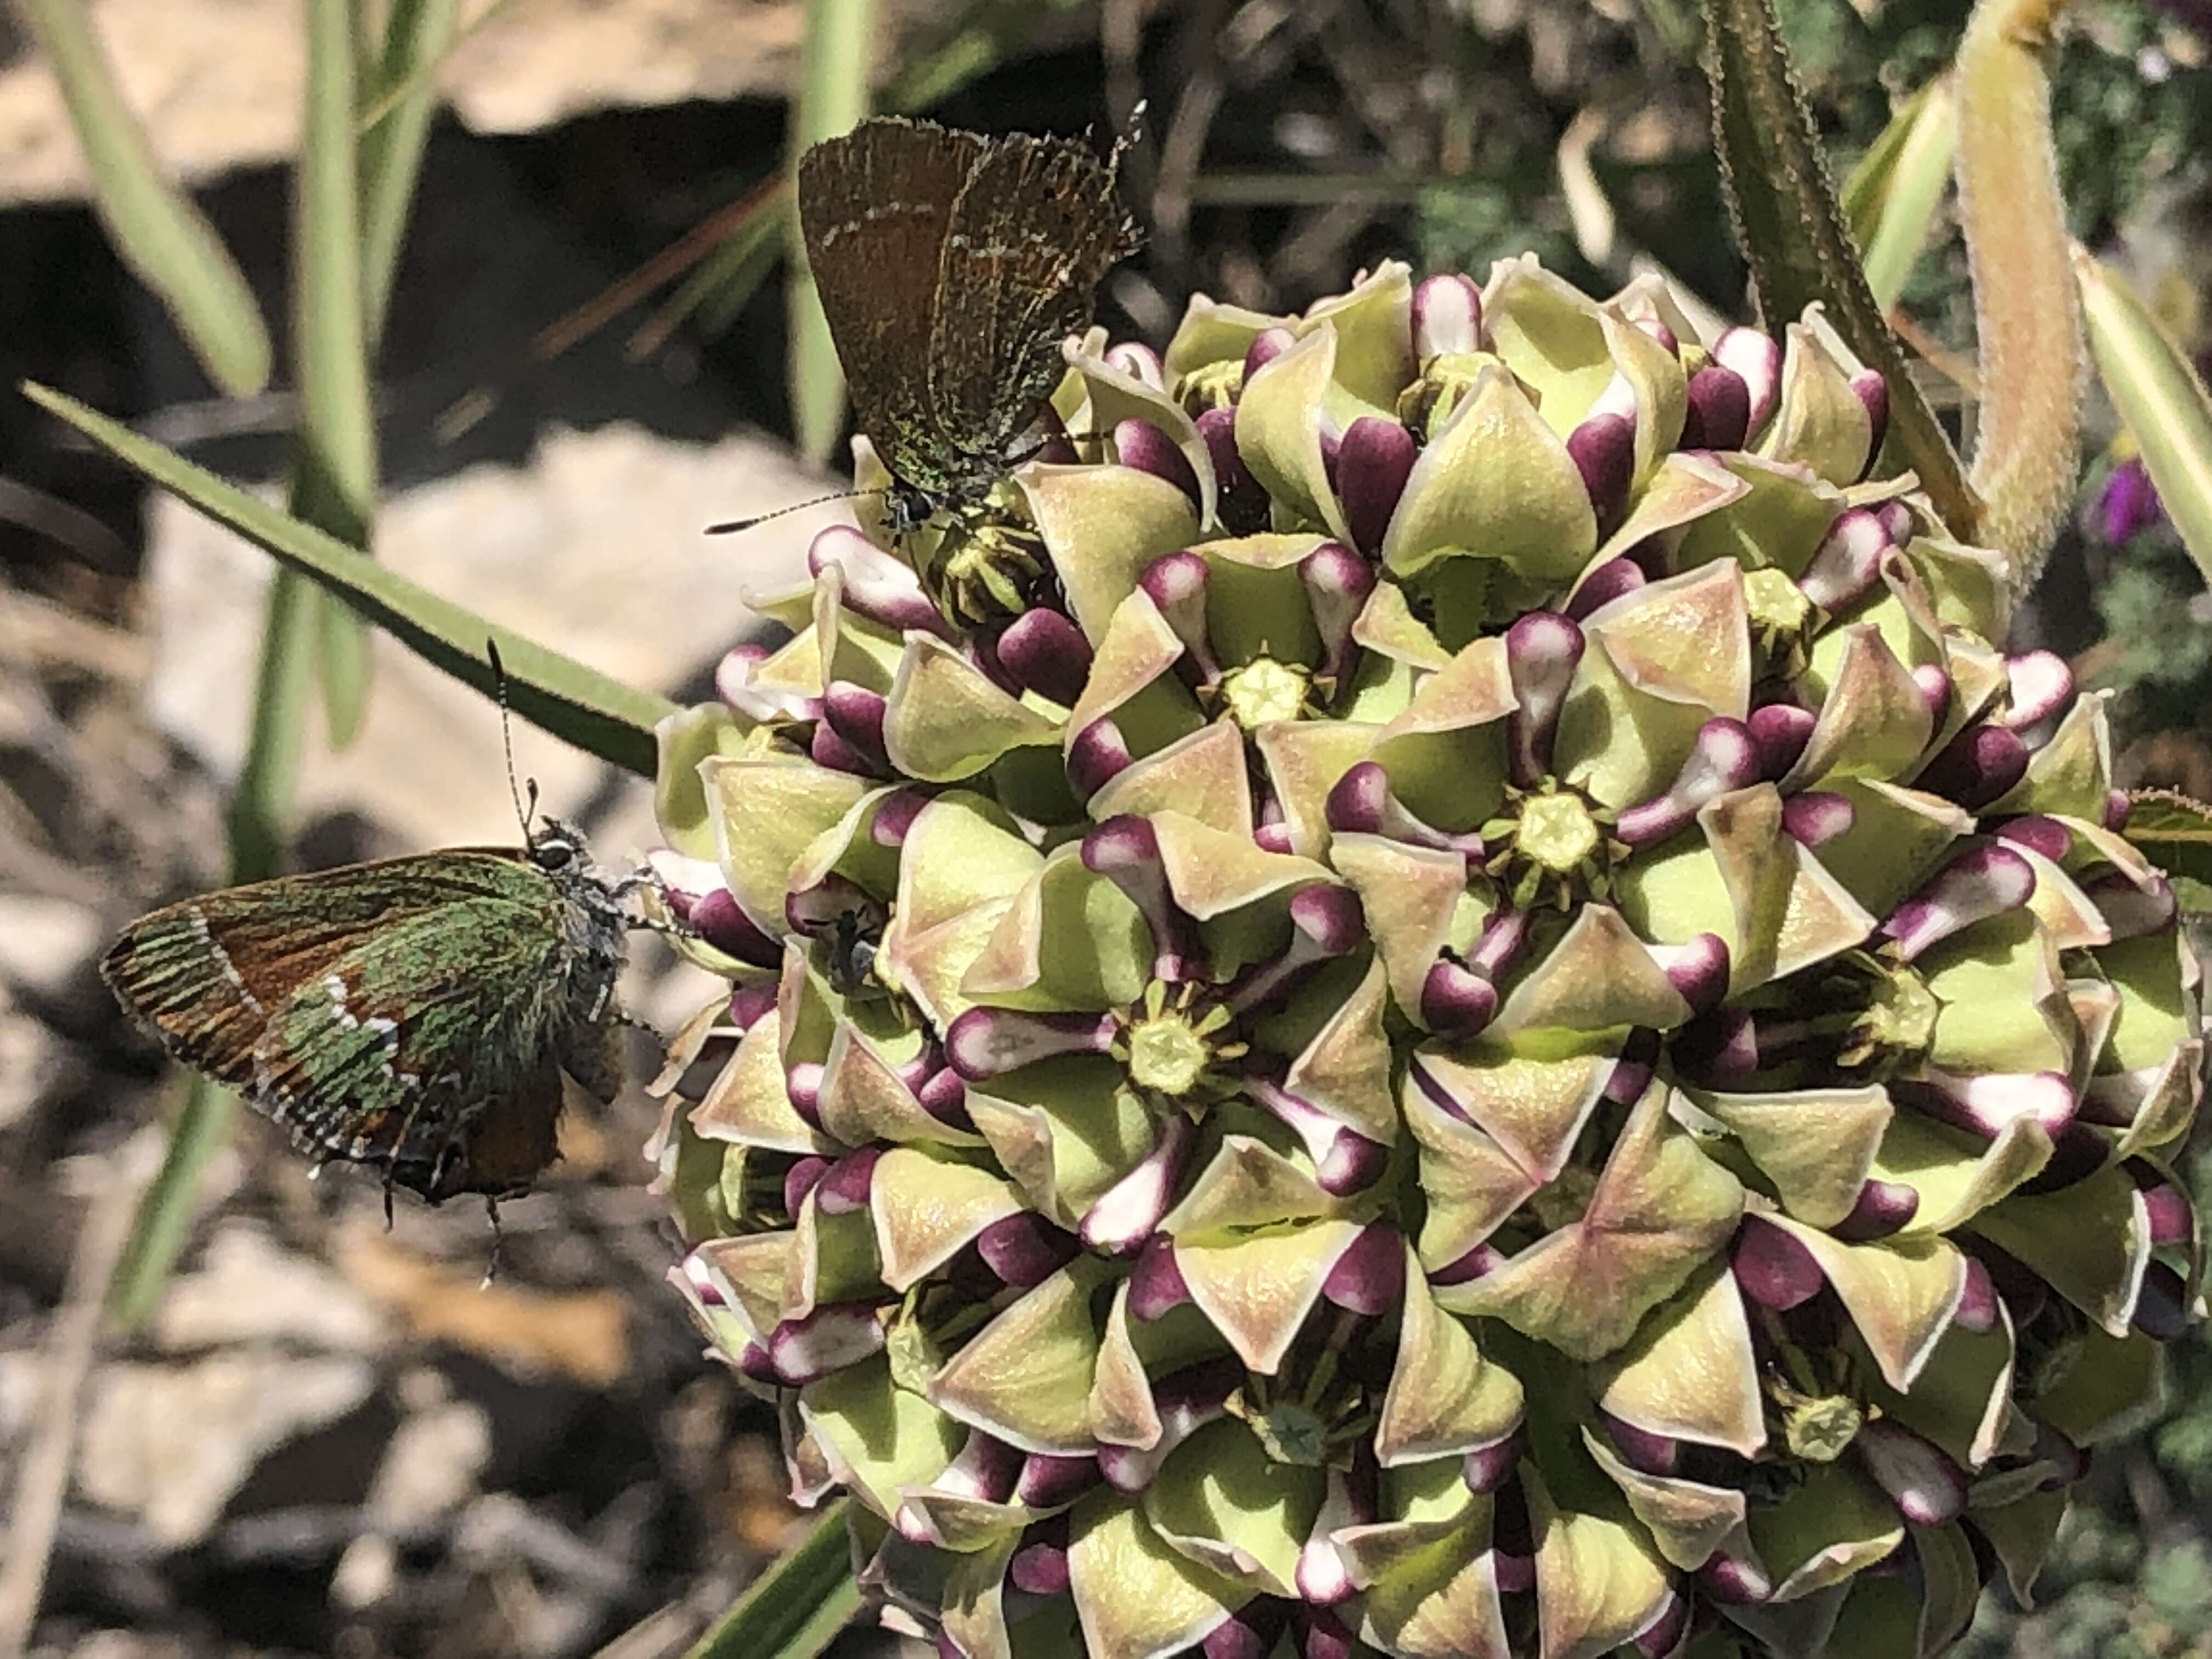 Image of spider milkweed